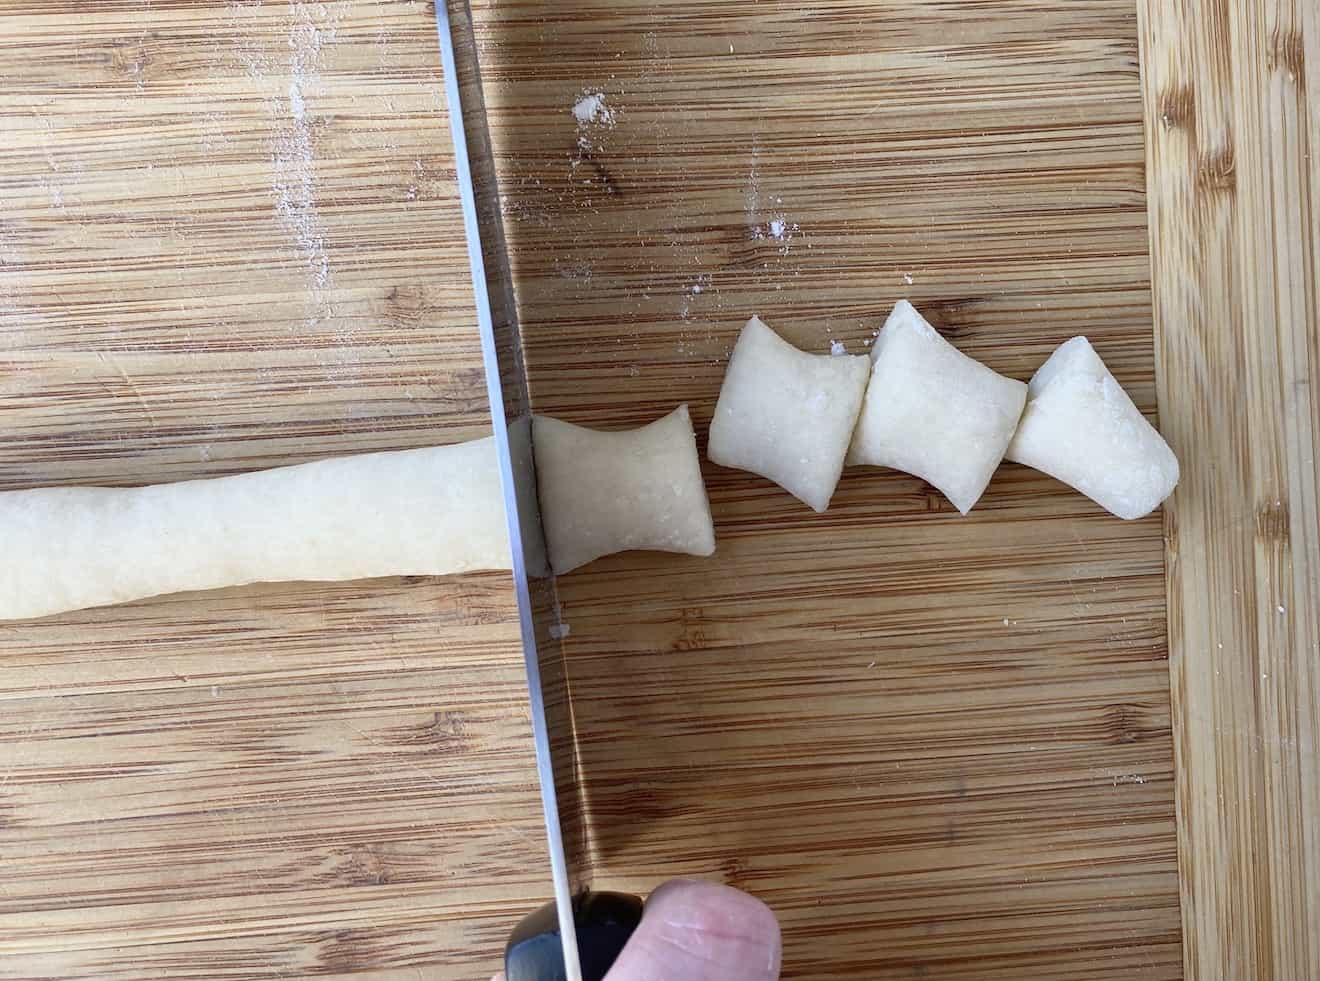 Using a knife to cut gnocchi